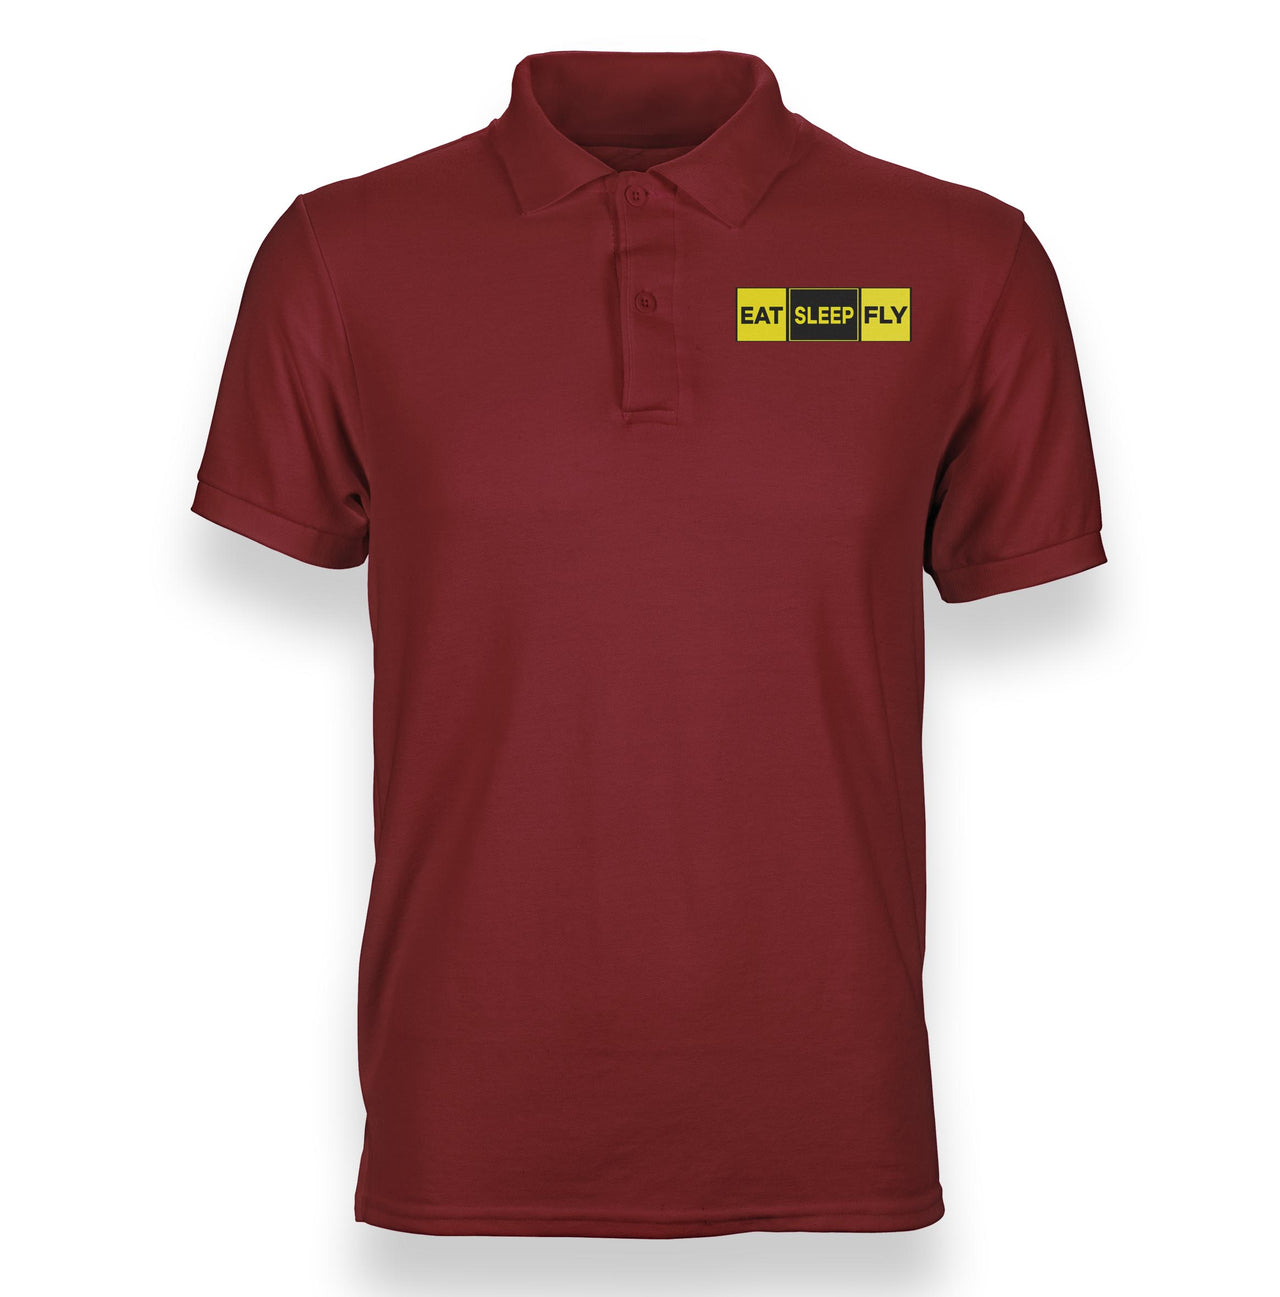 Eat Sleep Fly (Colourful) Designed Polo T-Shirts